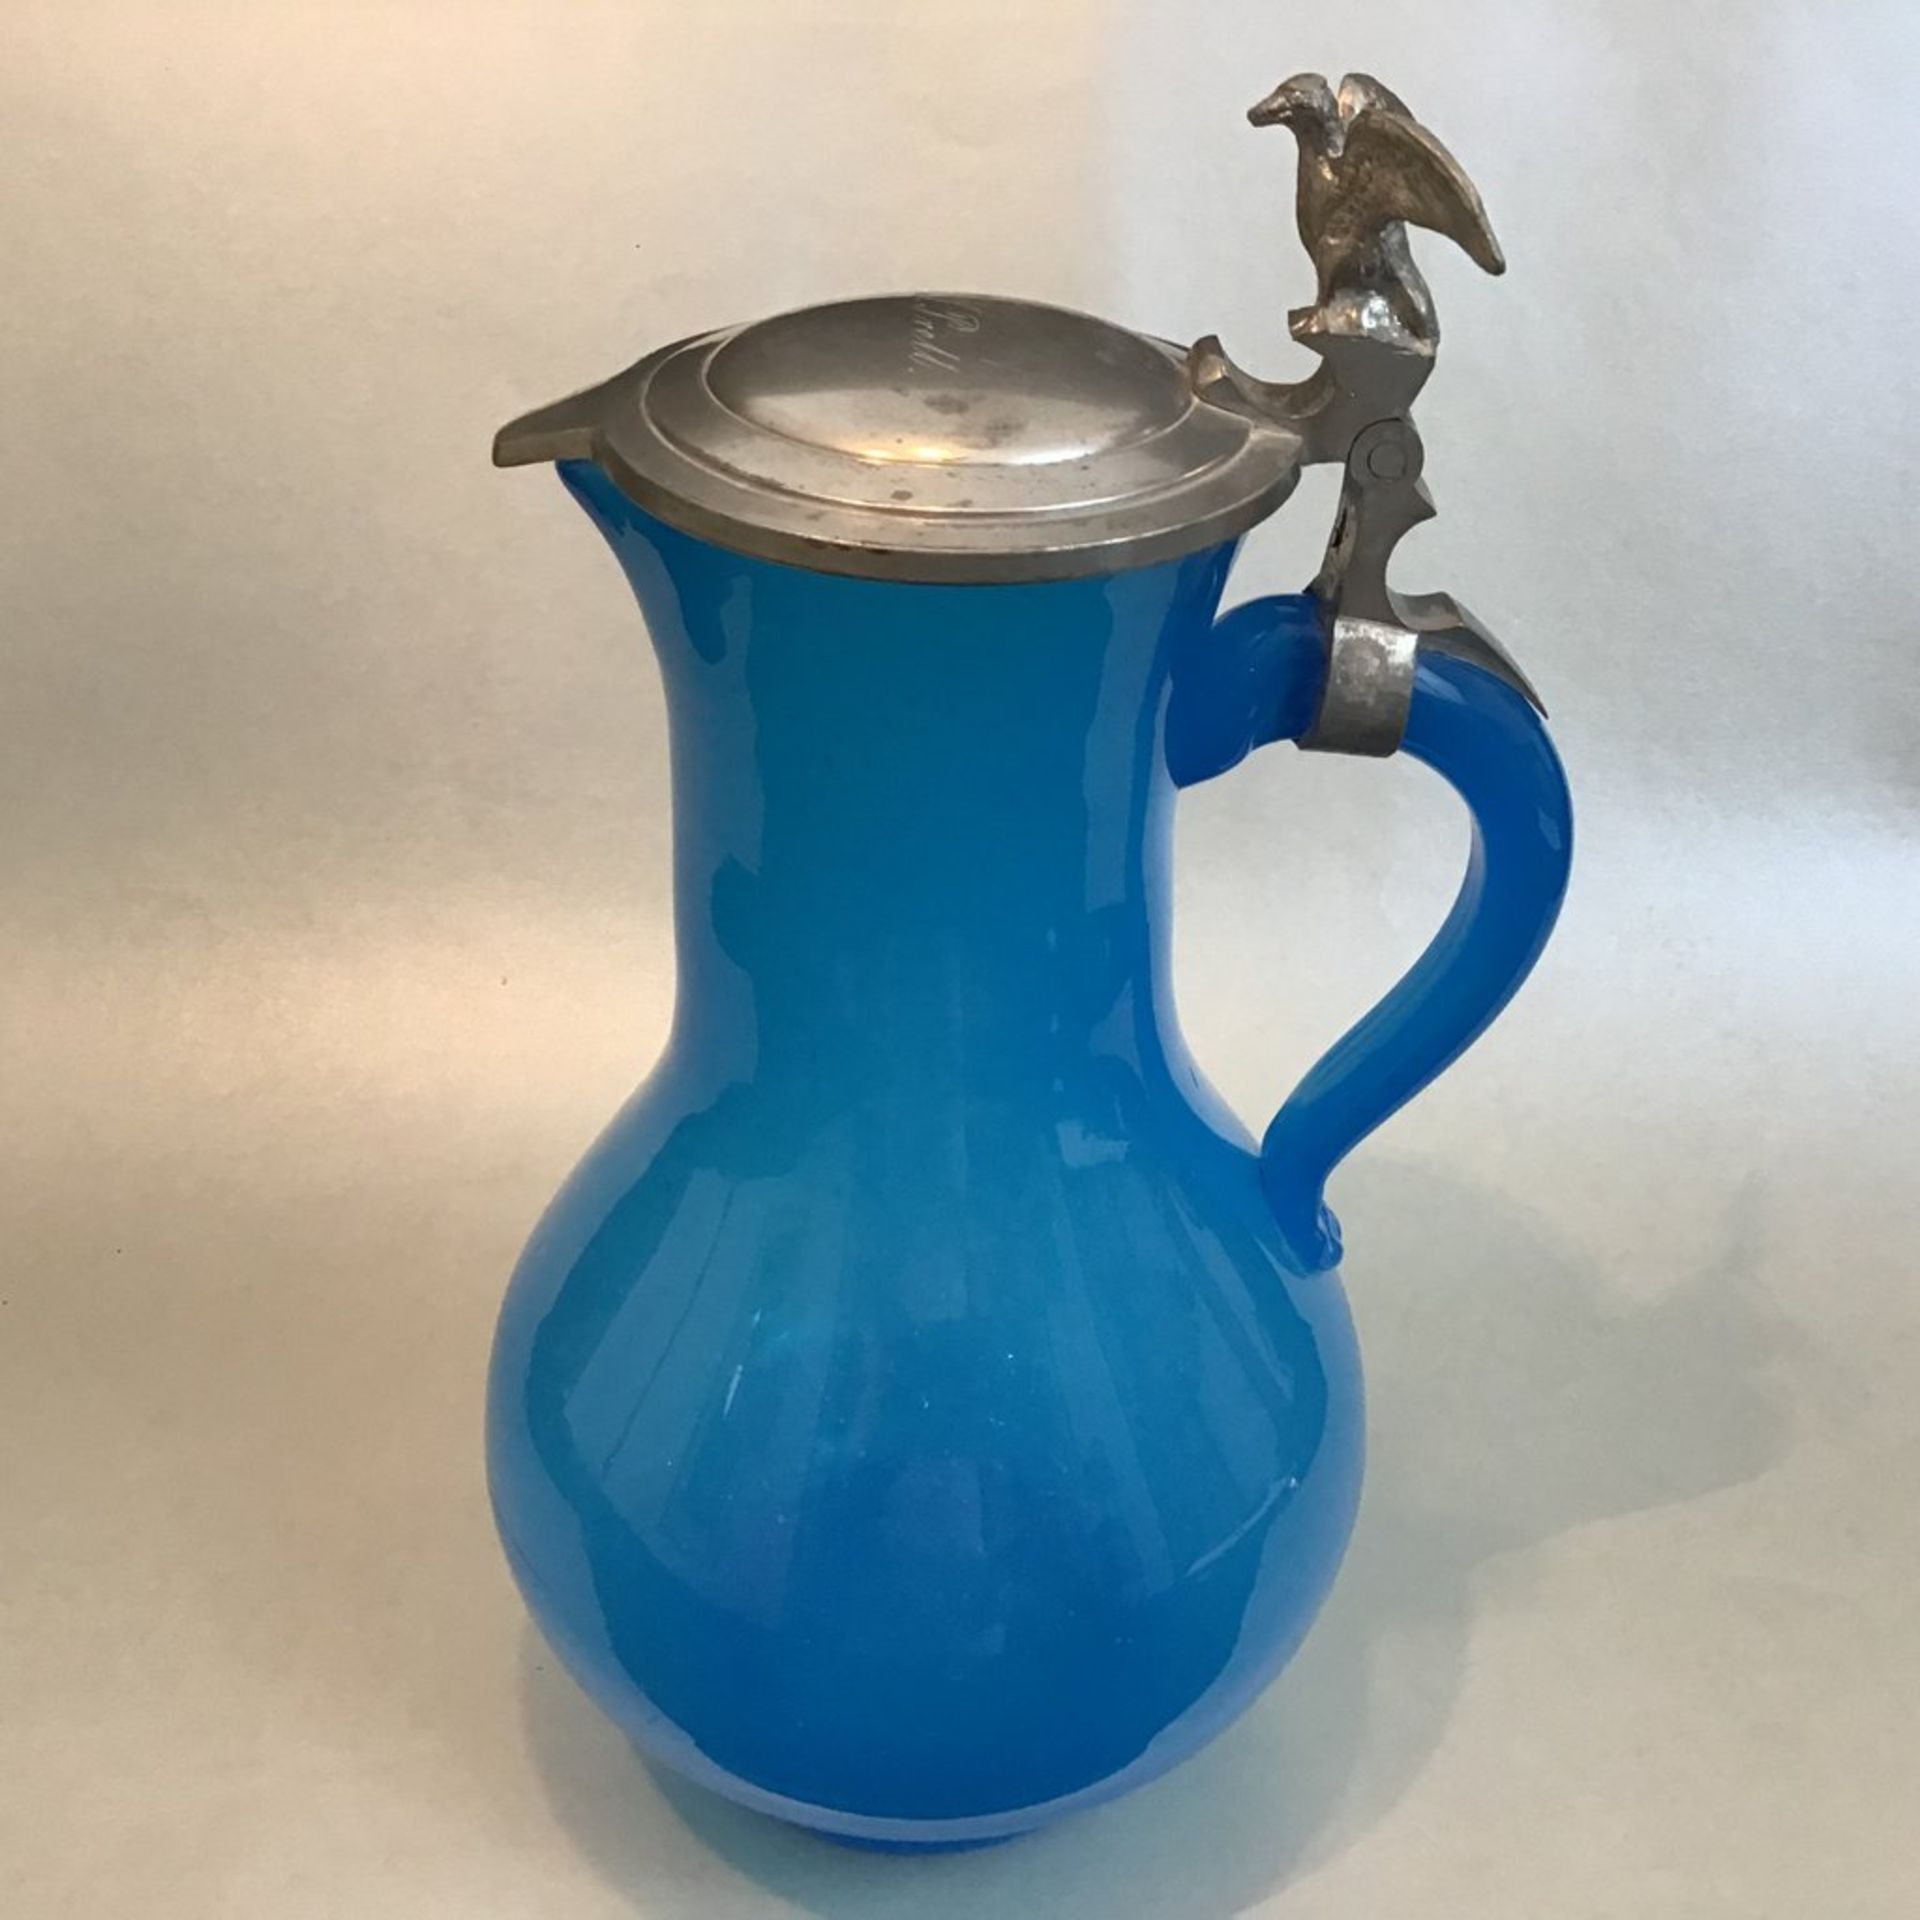 Biedermeier Birnenkrug mit Zinndeckel, um 1840, hellblau eingefärbtes Glas, Alabasterglas,